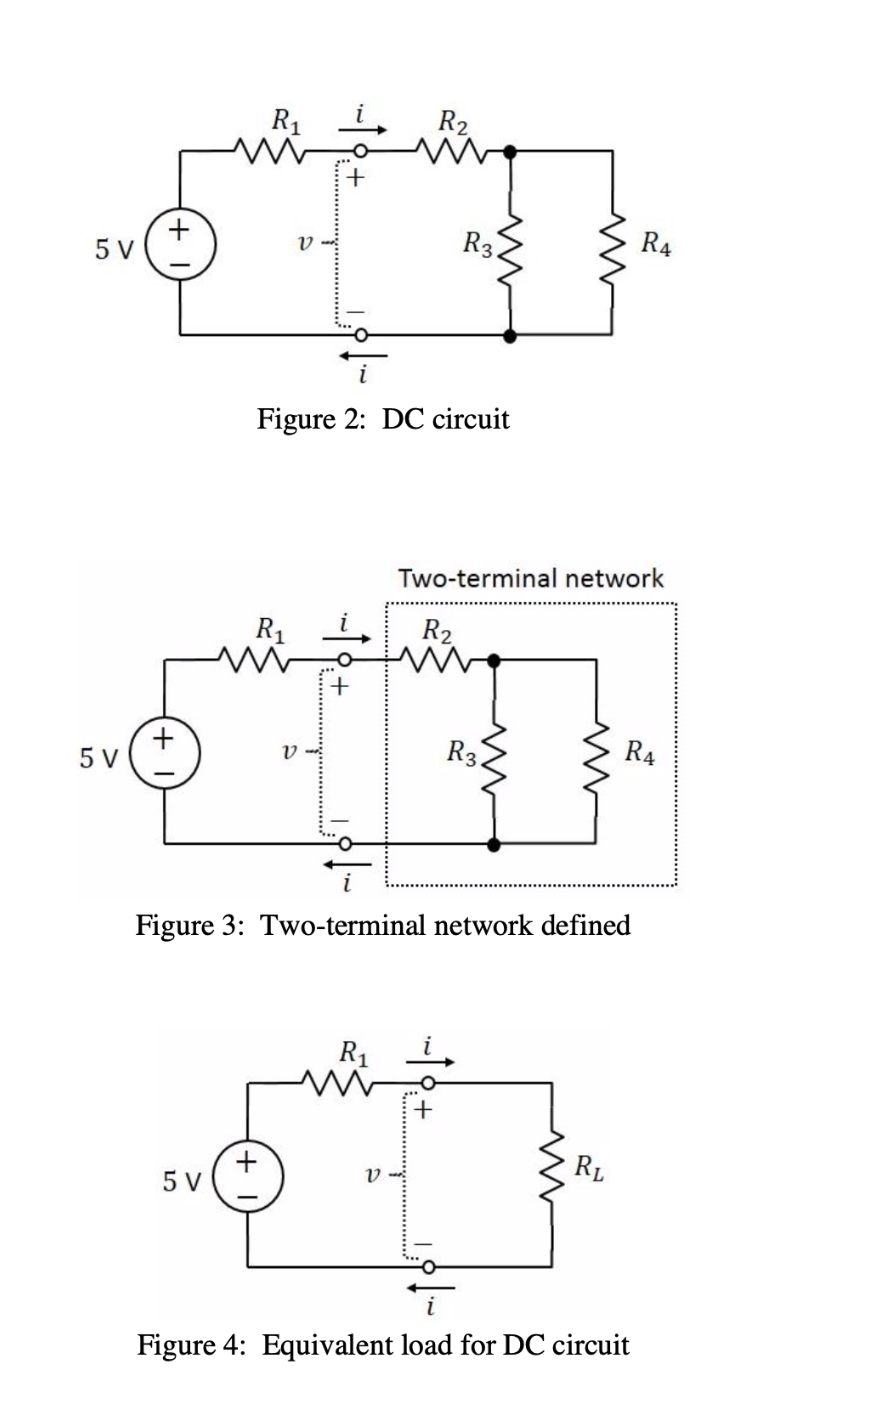 R2
R3
R4
V
5 V
Figure 2: DC circuit
Two-terminal network
R2
R1
+
5 V
R3
R4
V
Figure 3: Two-terminal network defined
R1
+
+
5 V
V
Figure 4: Equivalent load for DC circuit
w
